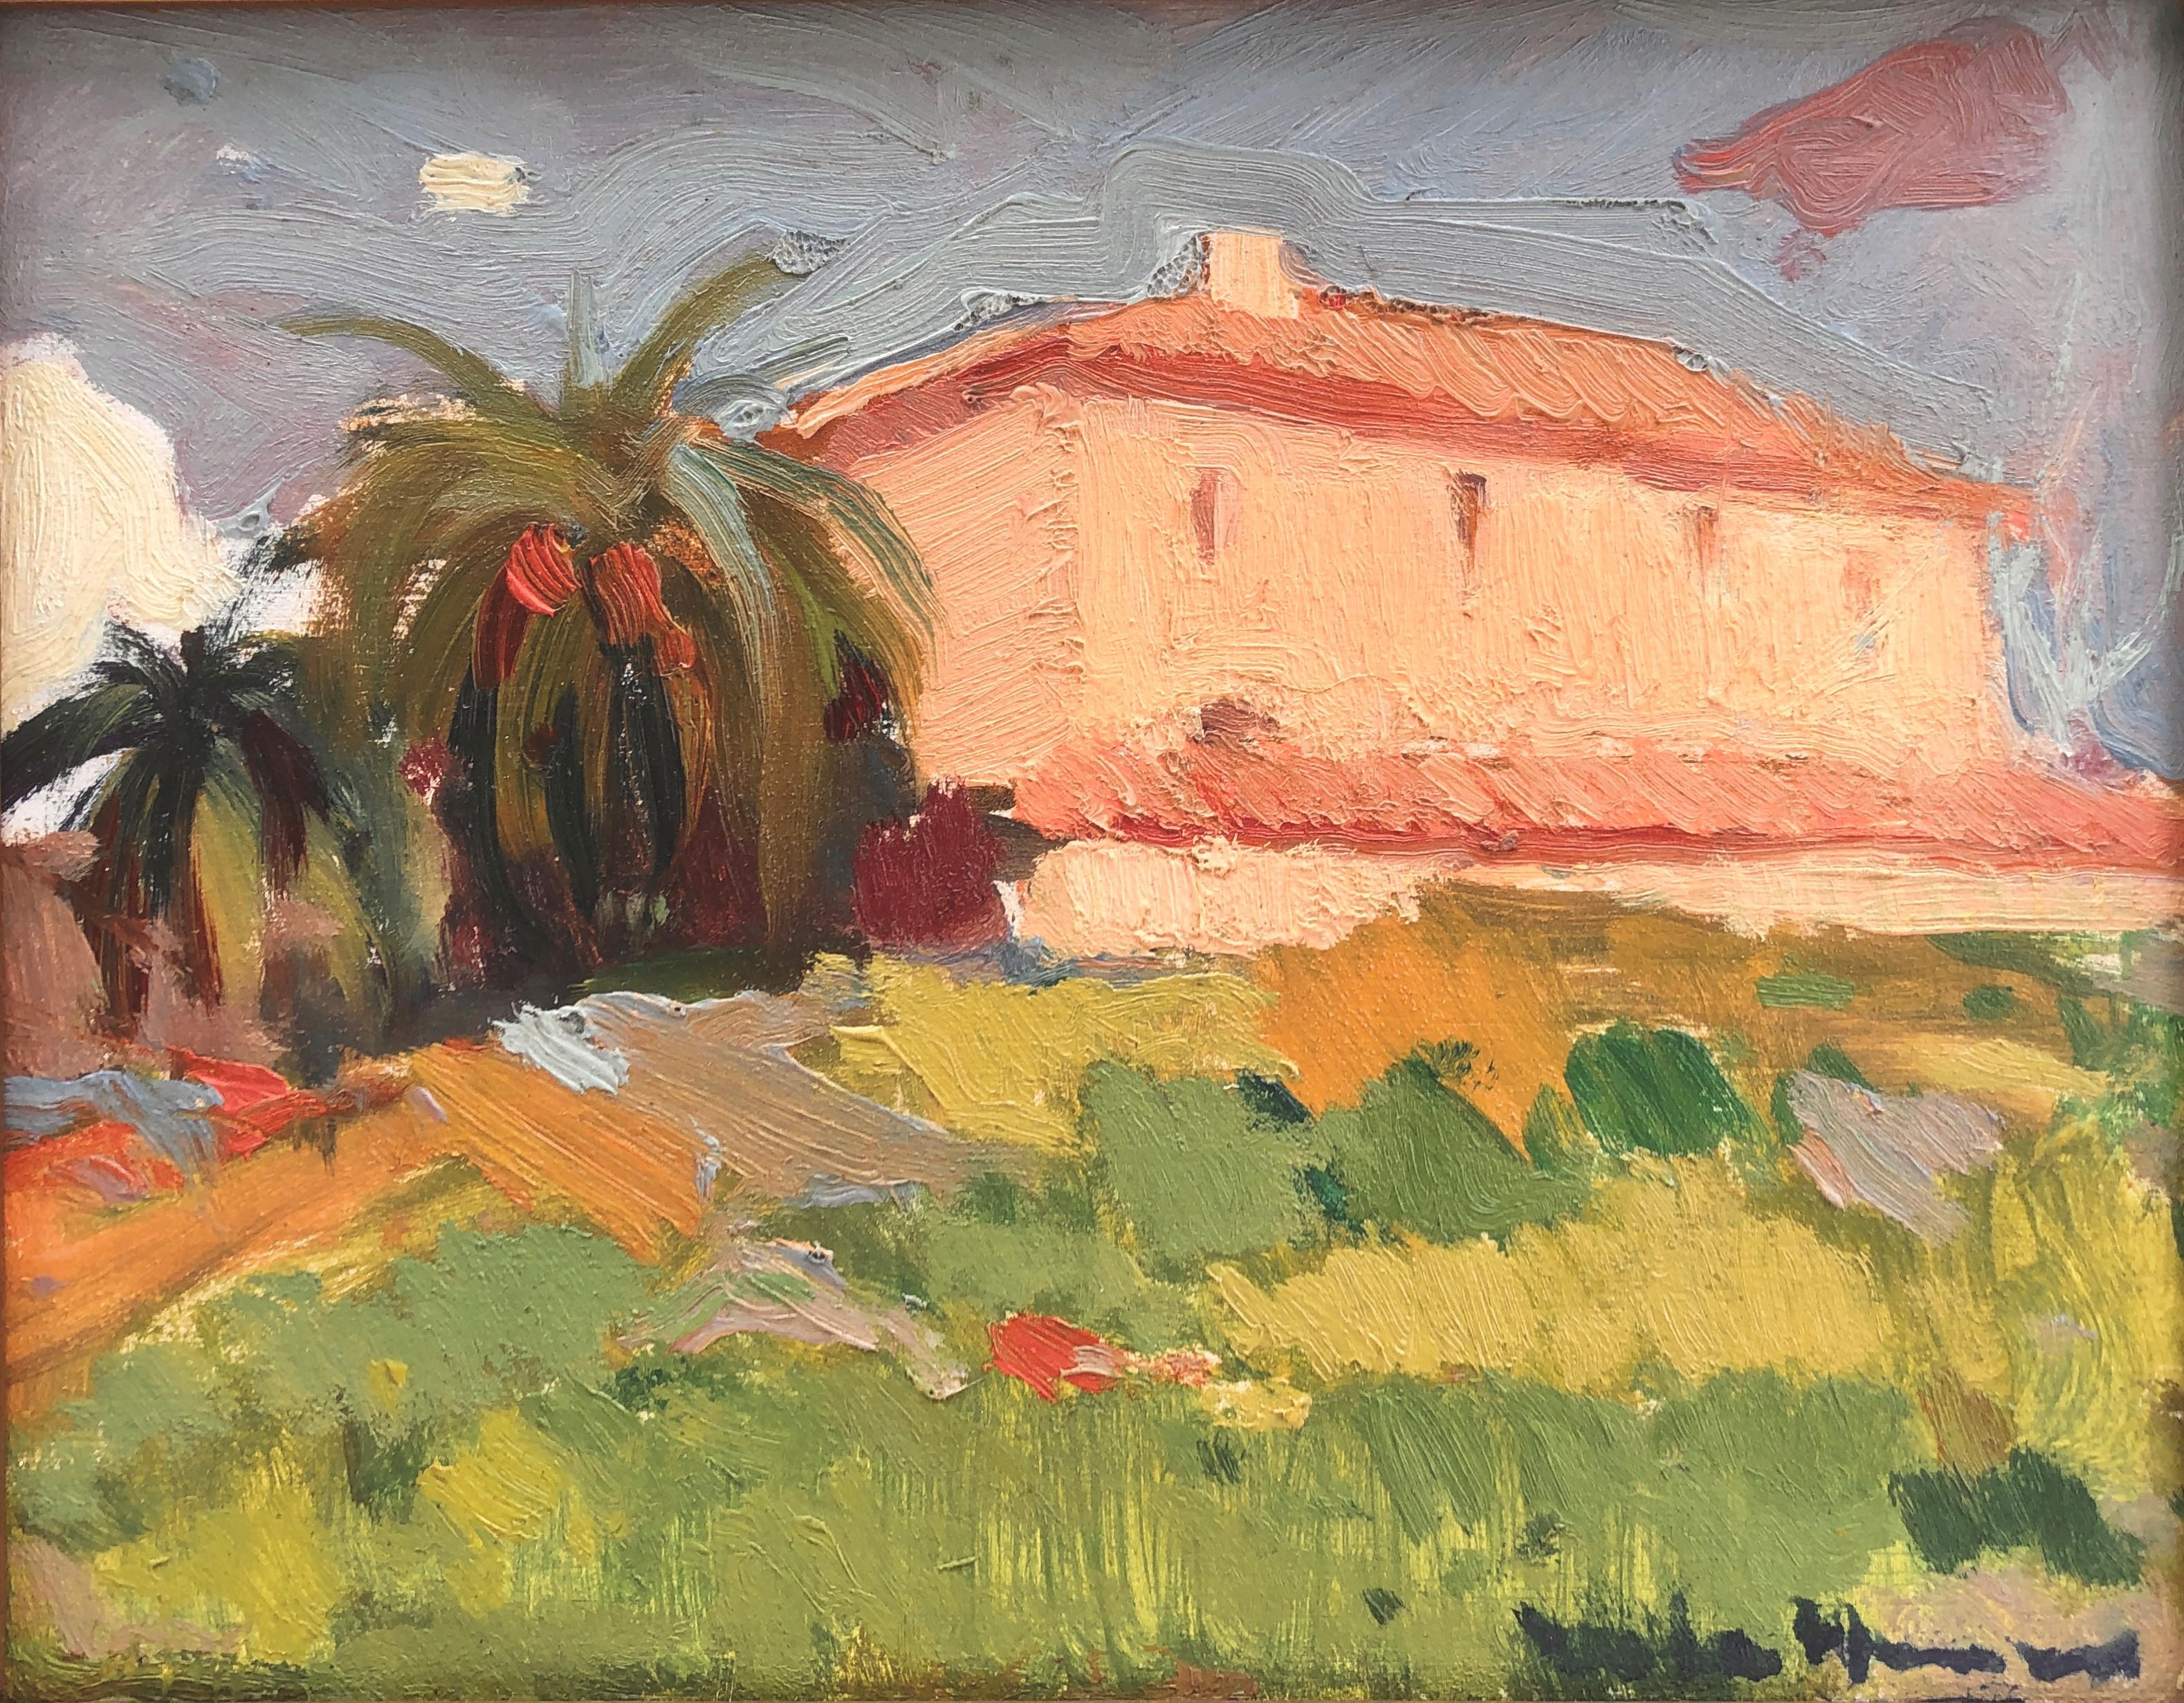 Antonio Sala Herrero Landscape Painting - Spanish farmhouse Spain oil on board painting landscape